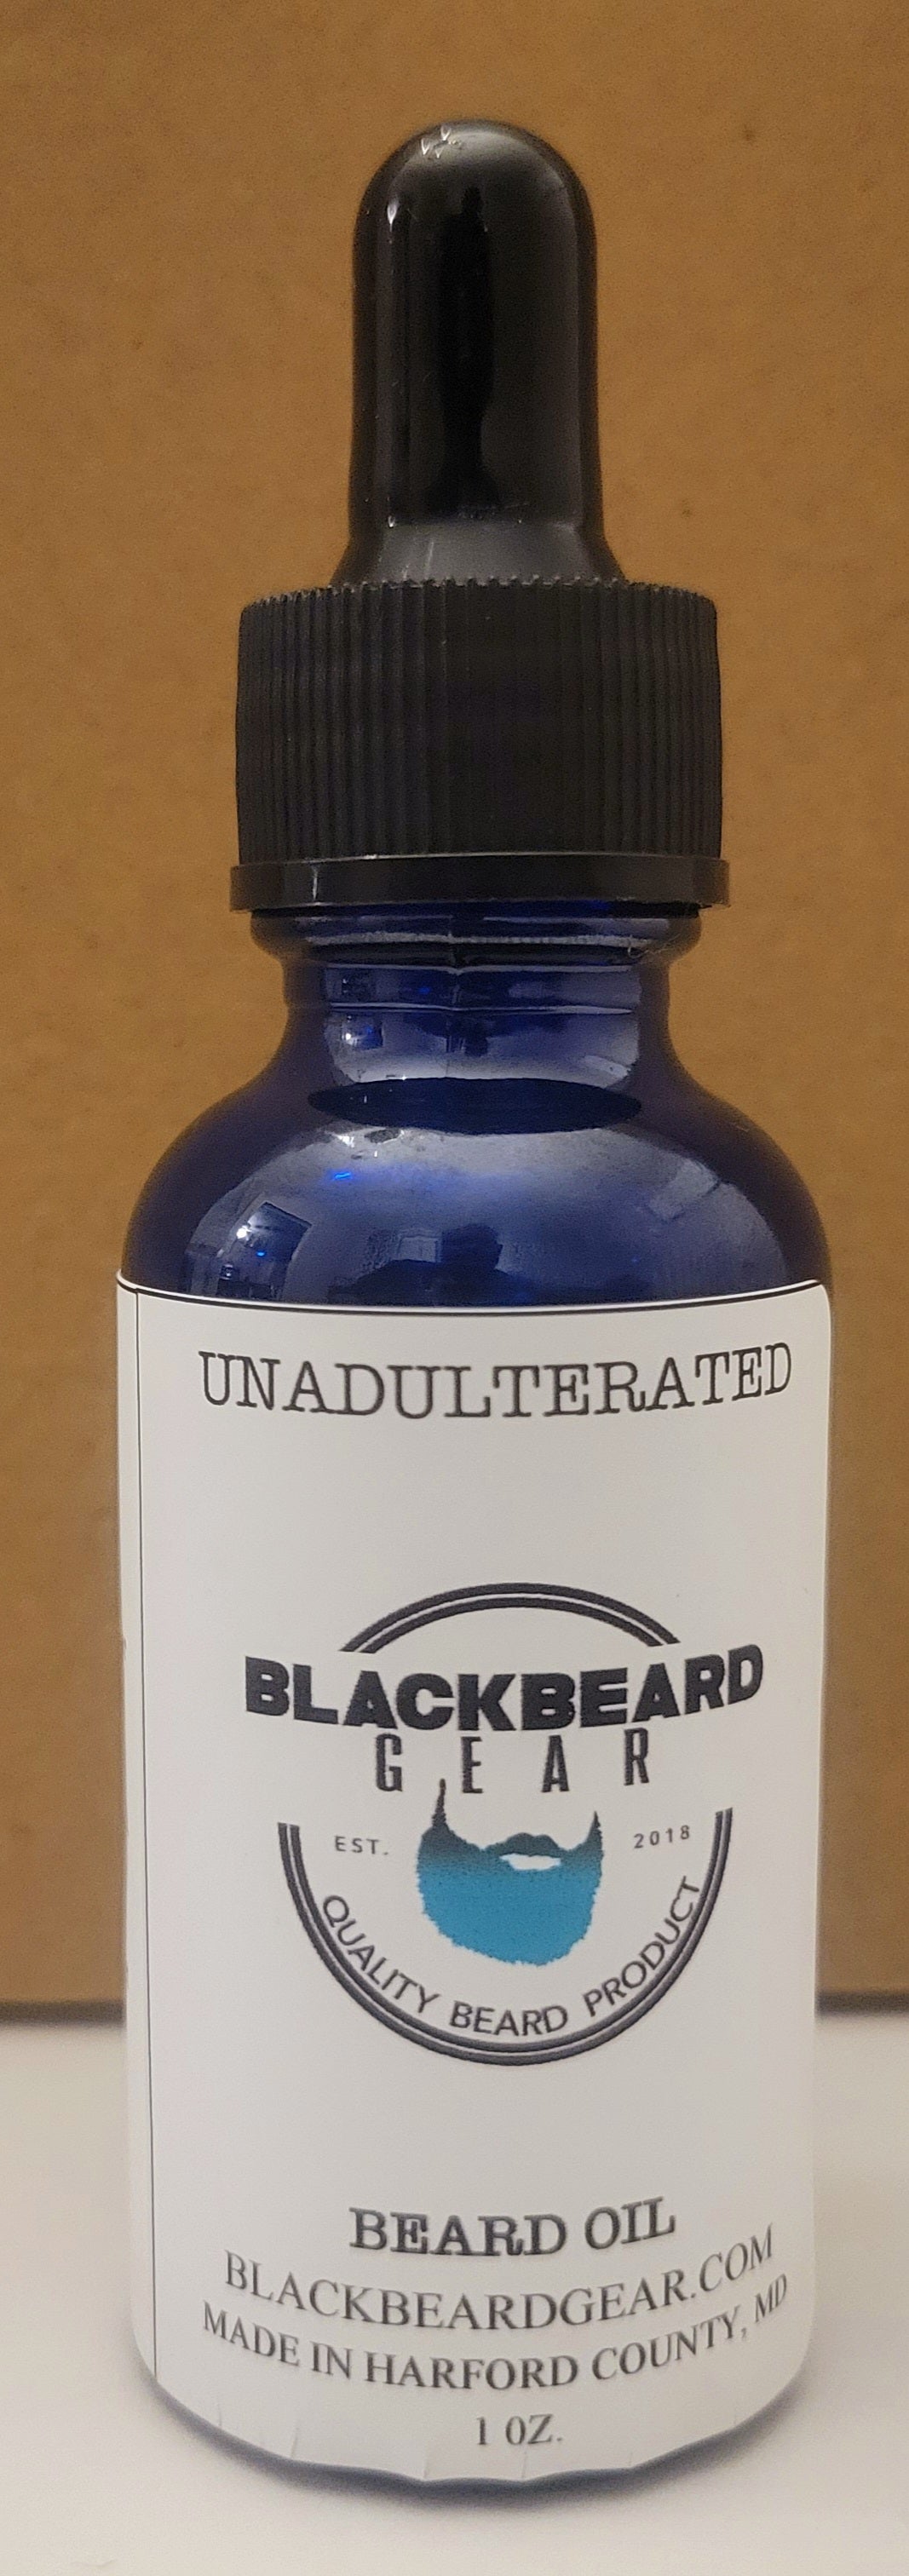 UNADULTERATED Beard Oil